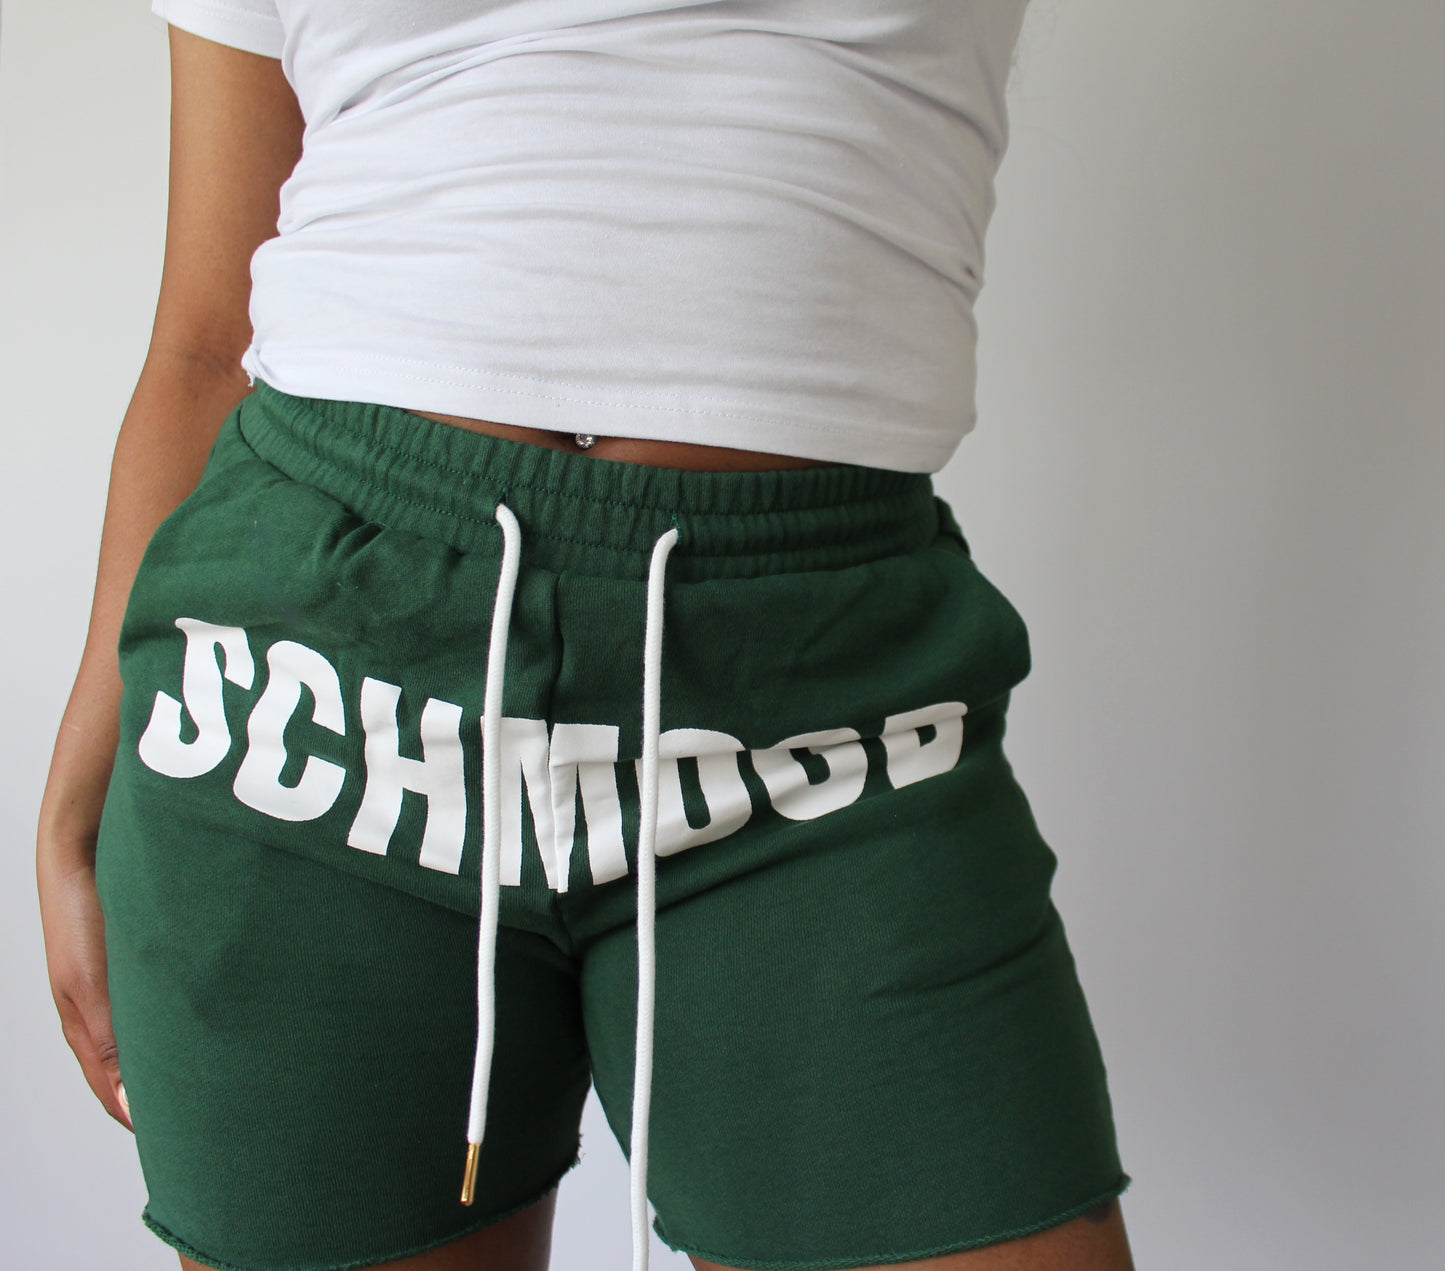 SCHMOOD Sweat Shorts - Forest Green/White